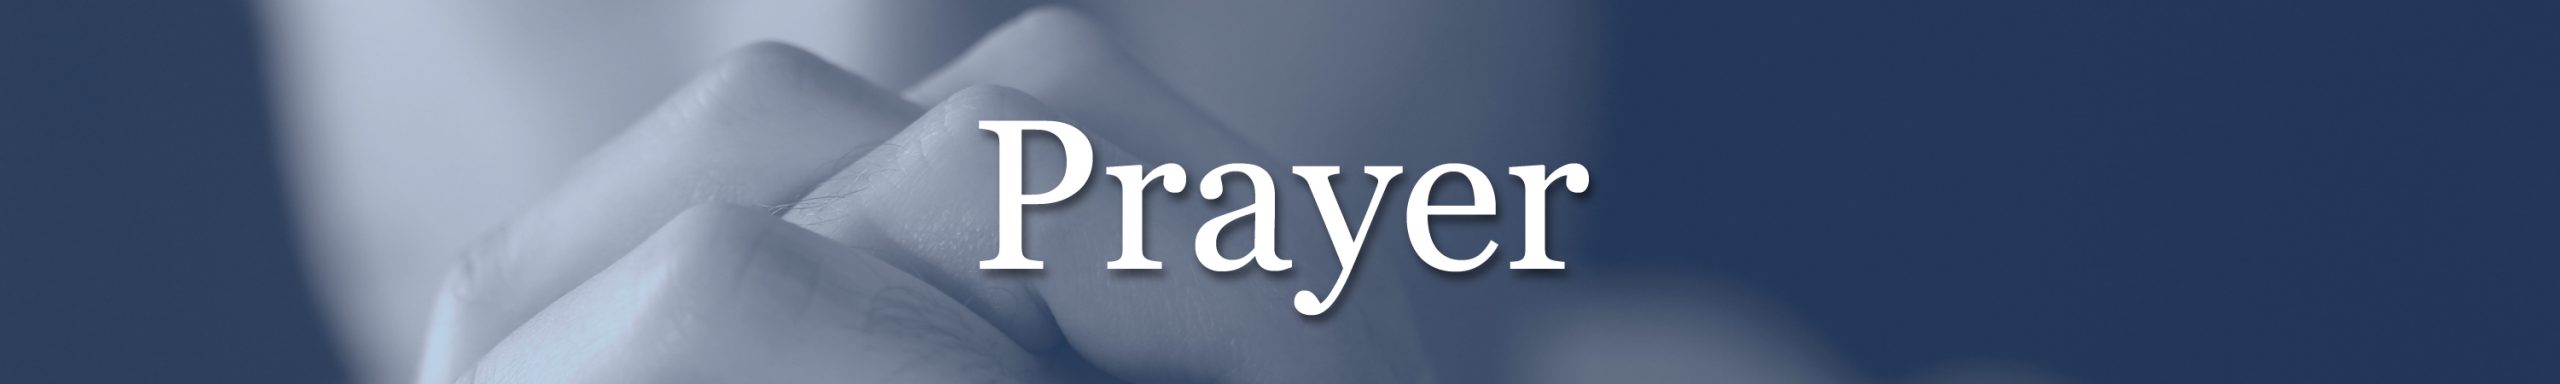 prayer list banner